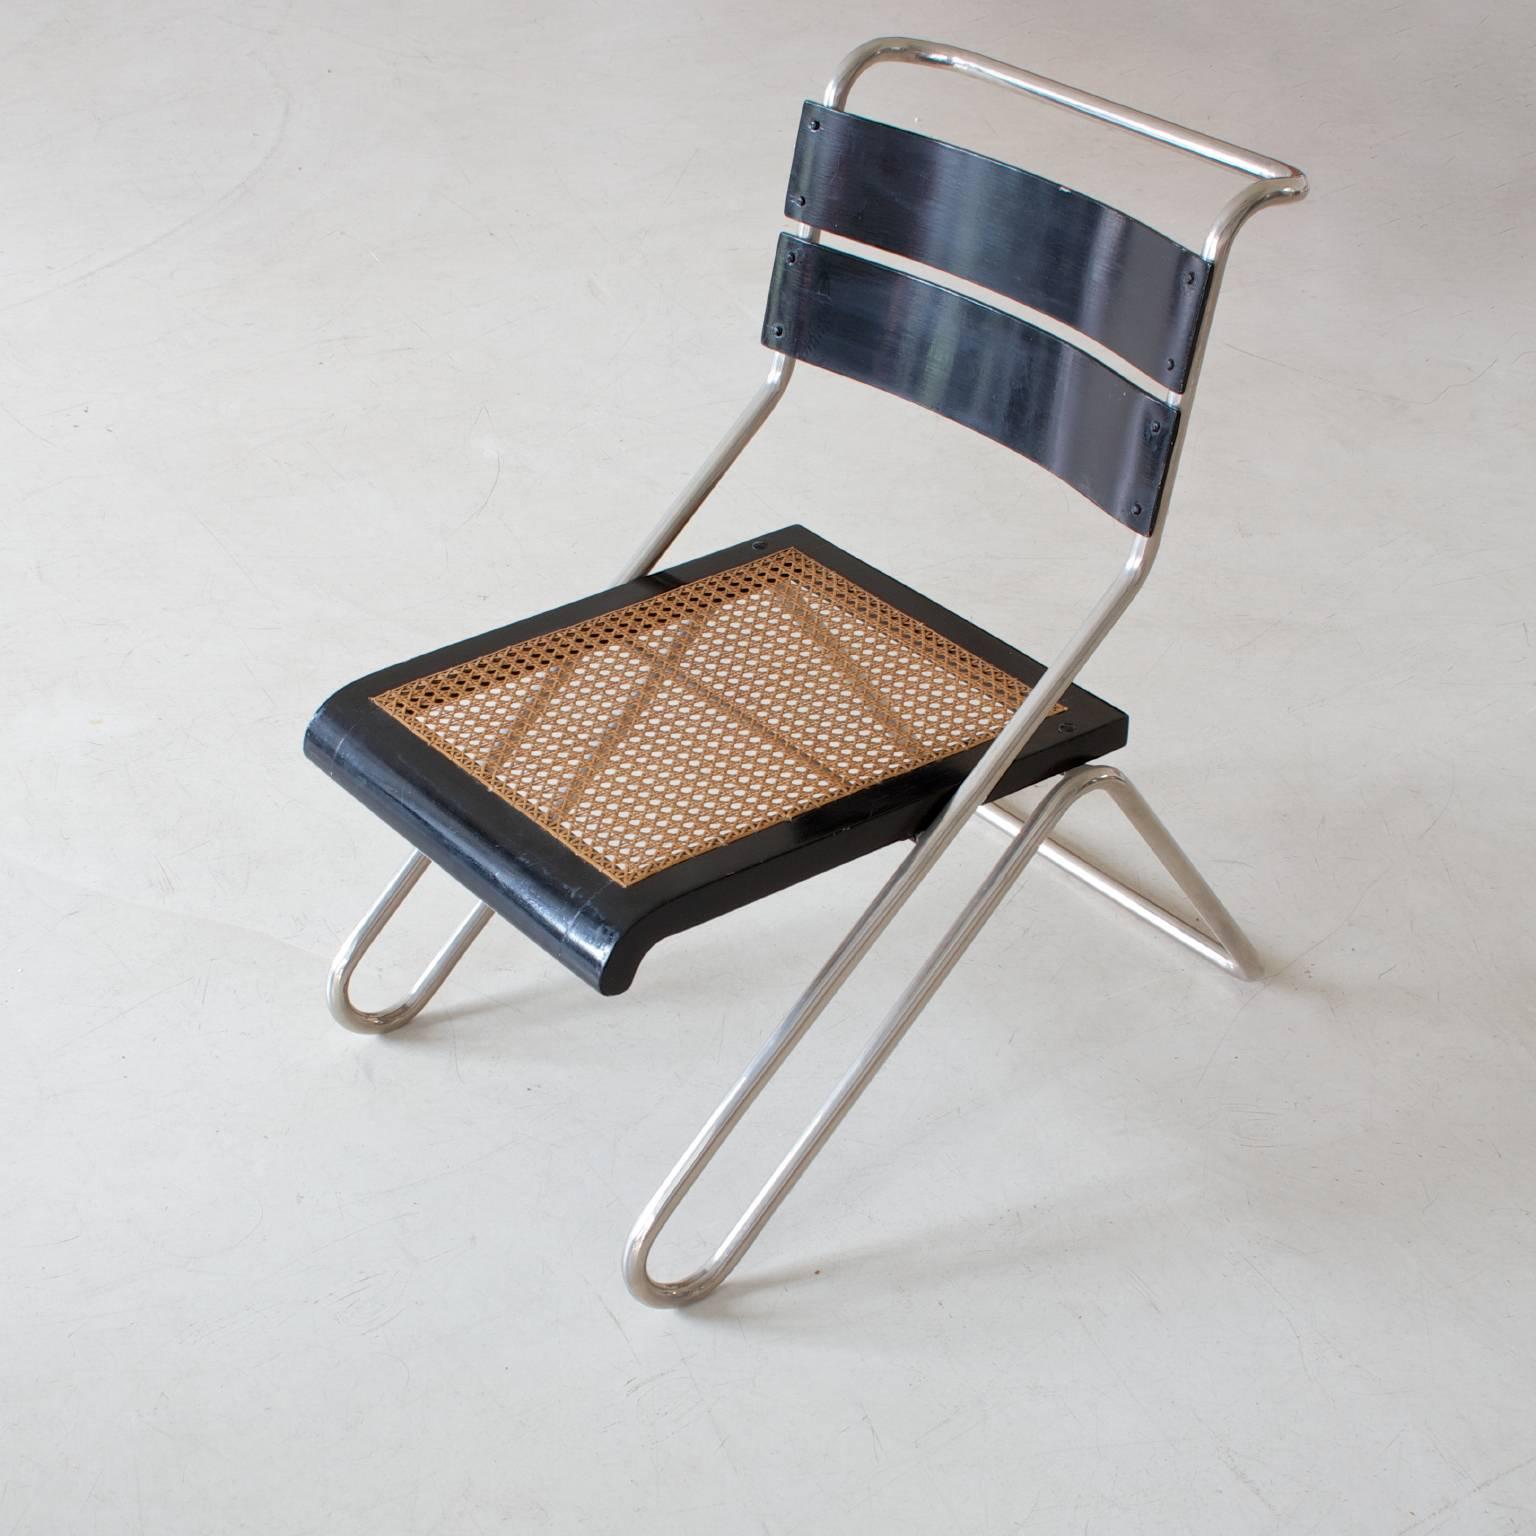 German Bauhaus Tubular Steel Chair by Erich Dieckmann, Manufactured by Cebaso, 1931